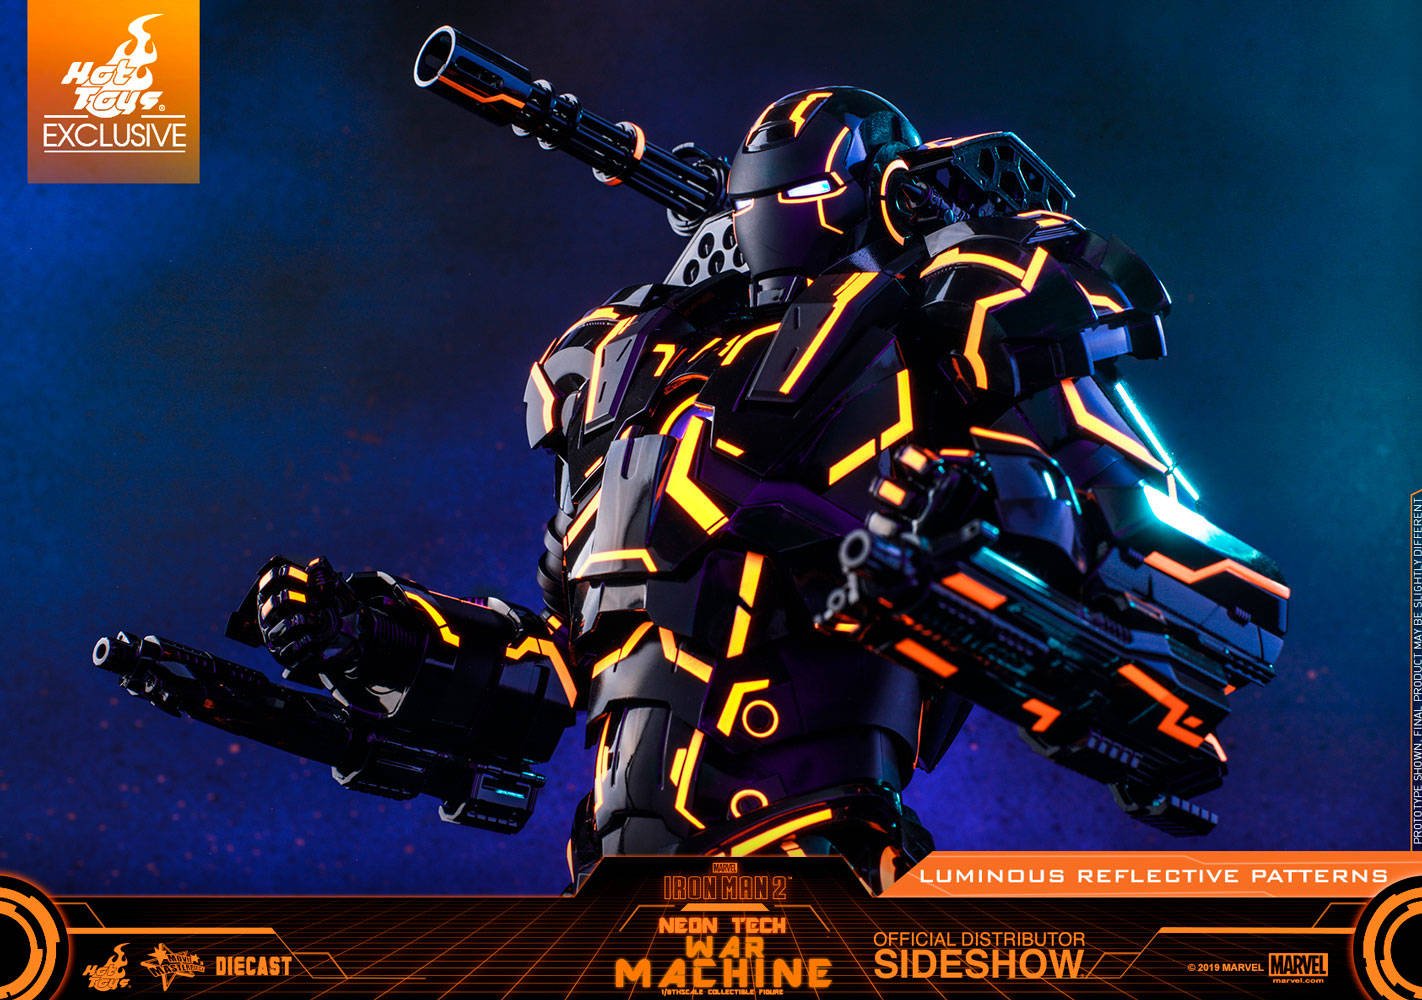 Immagine di Neon Tech War Machine, l'edizione speciale di Hot Toys